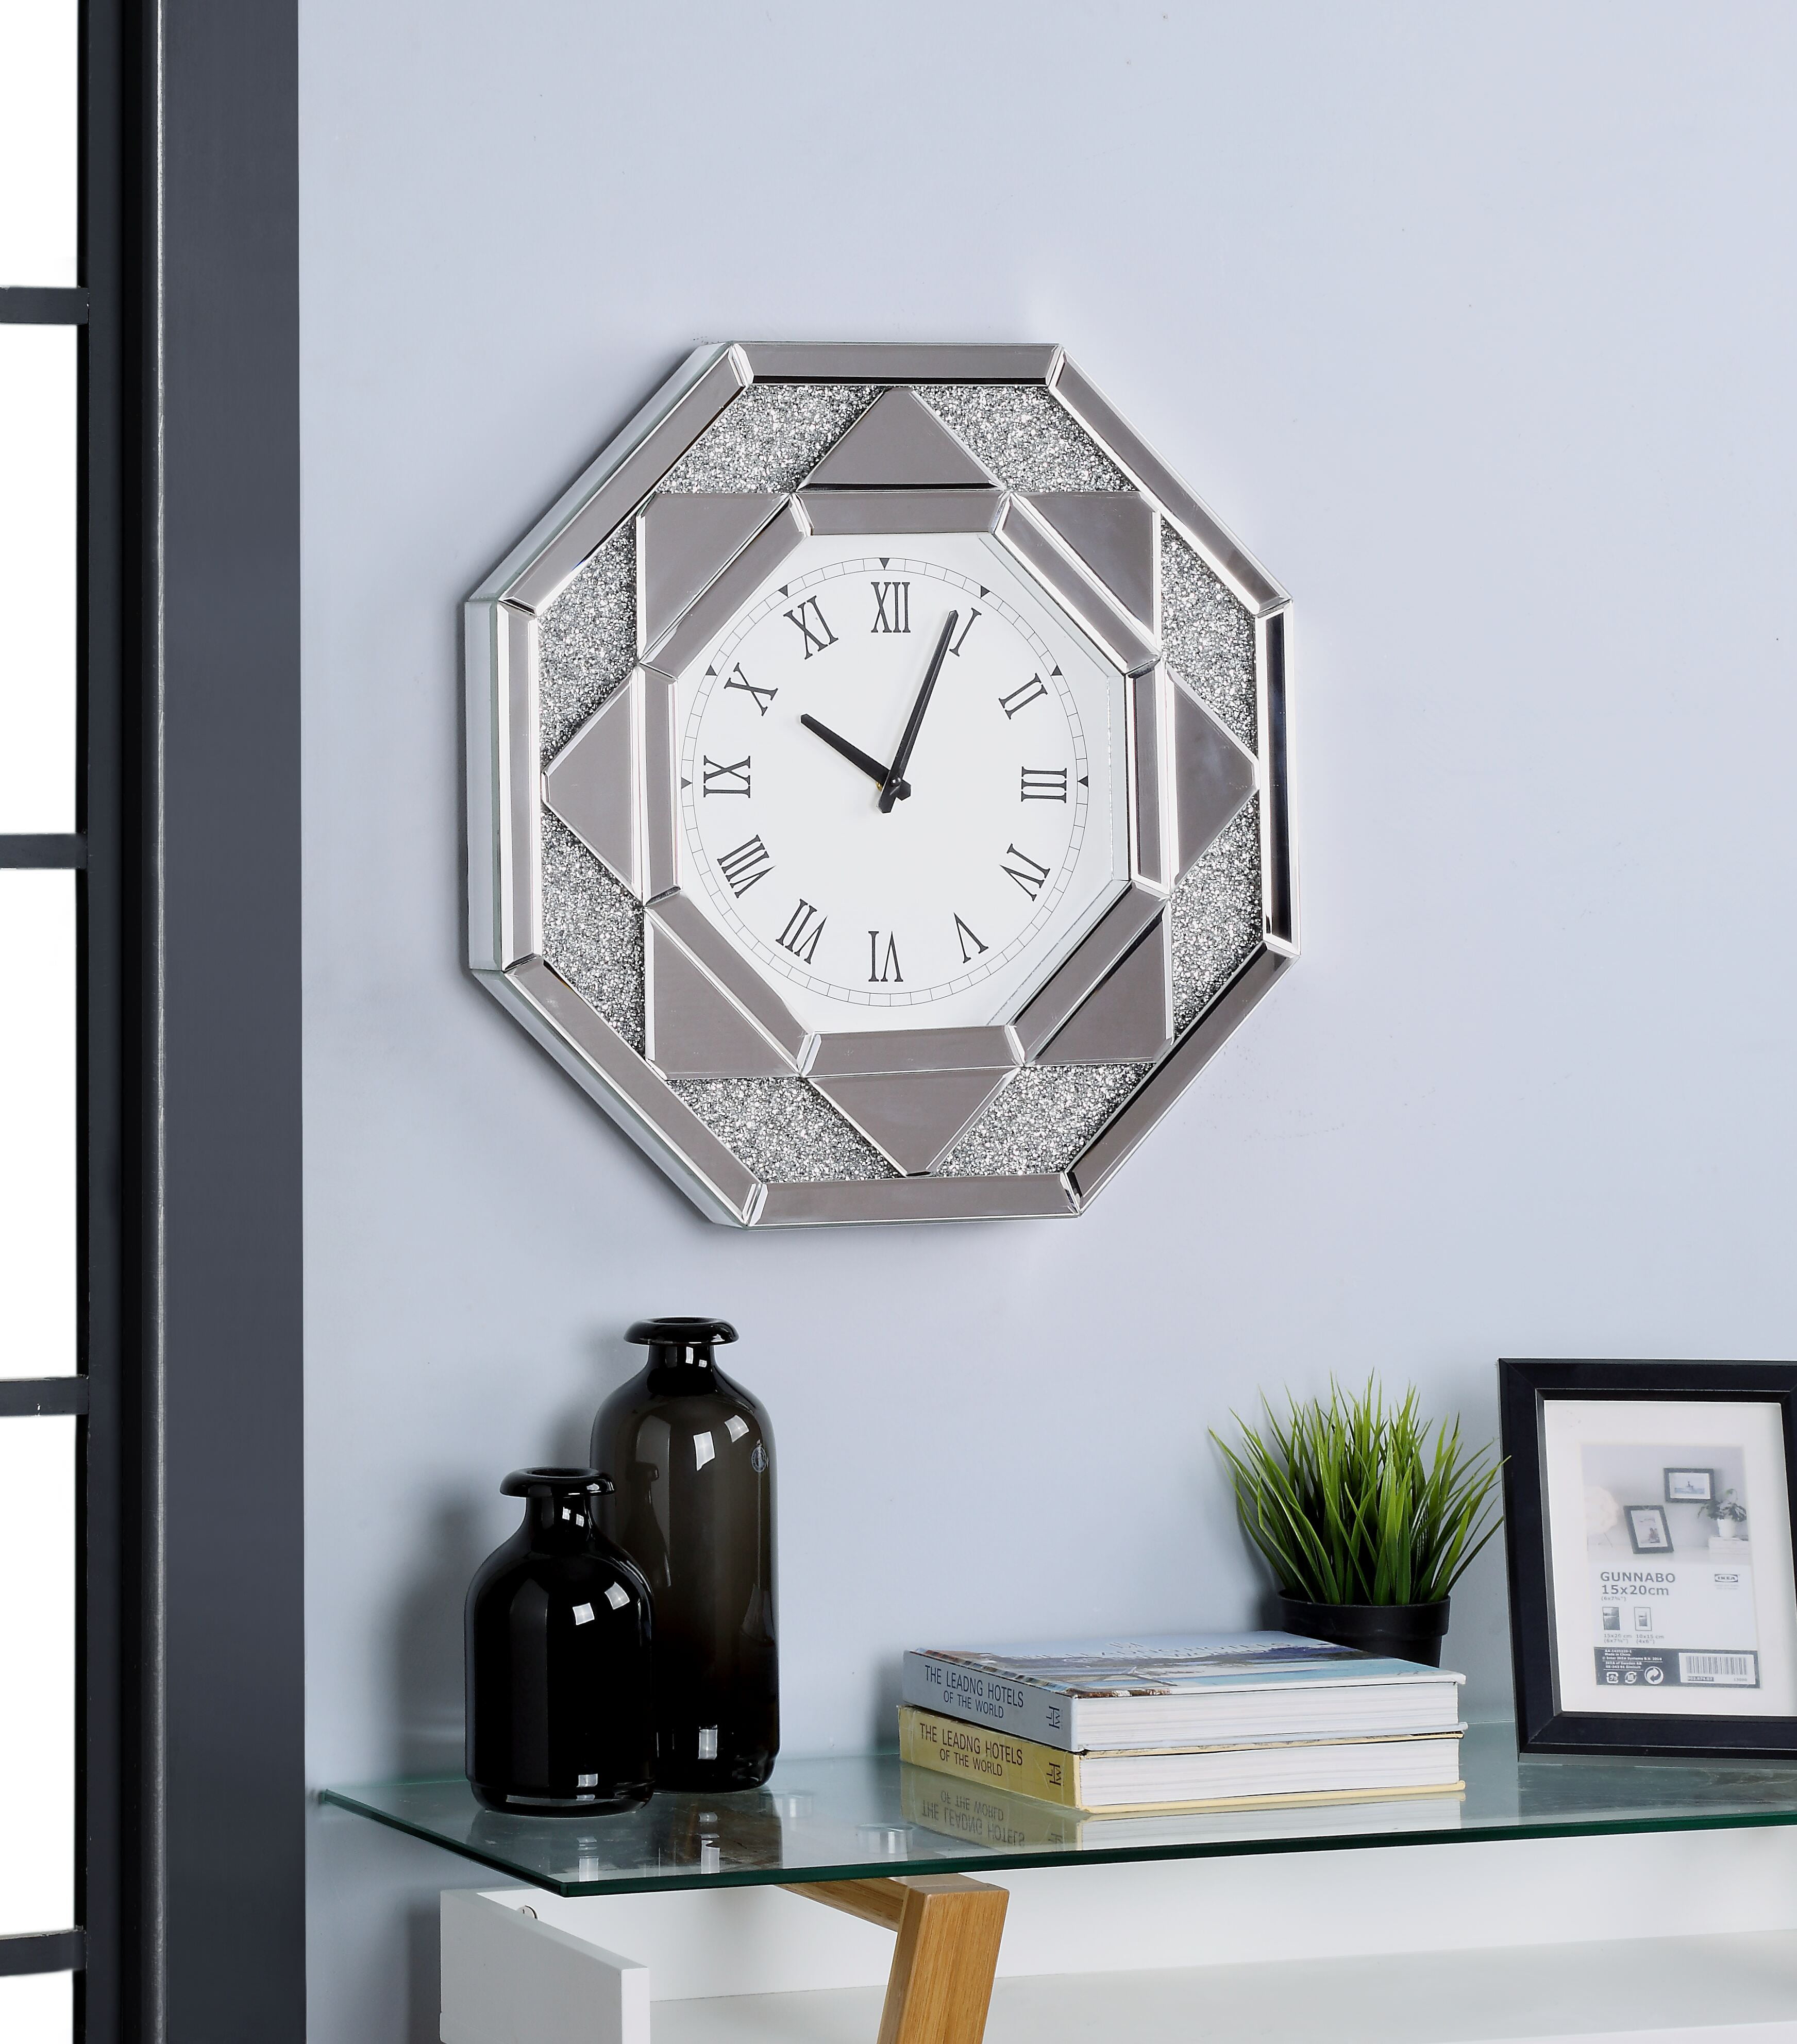 Acme Maita Wooden Frame Octagonal Wall Clock in Mirrored - Walmart.com